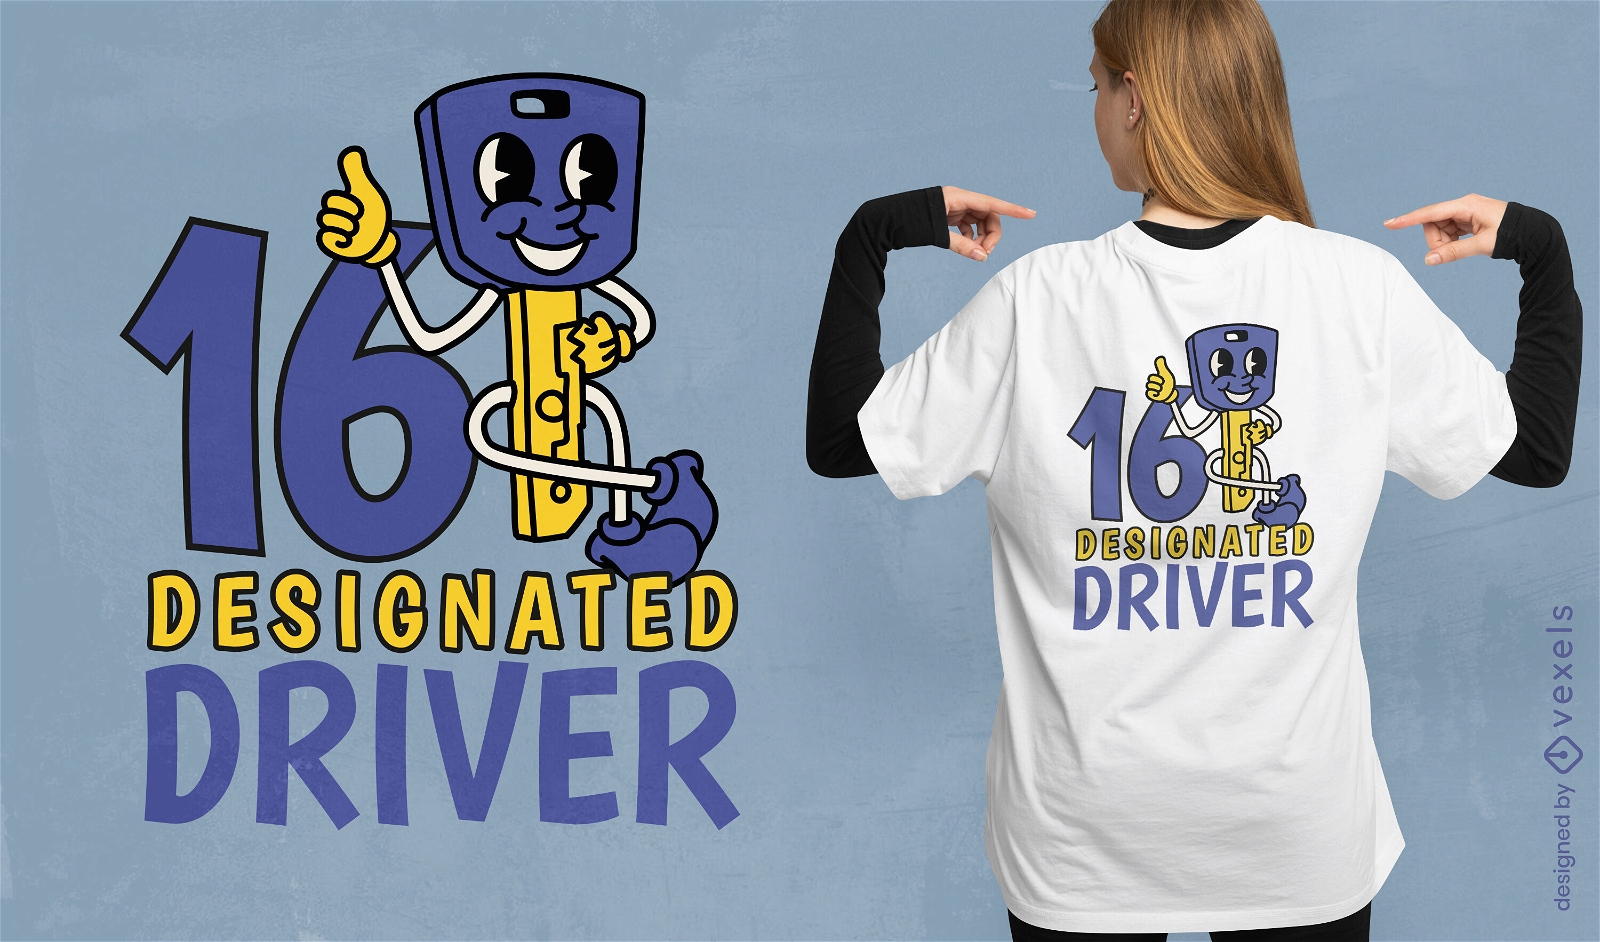 16 designated driver t-shirt design